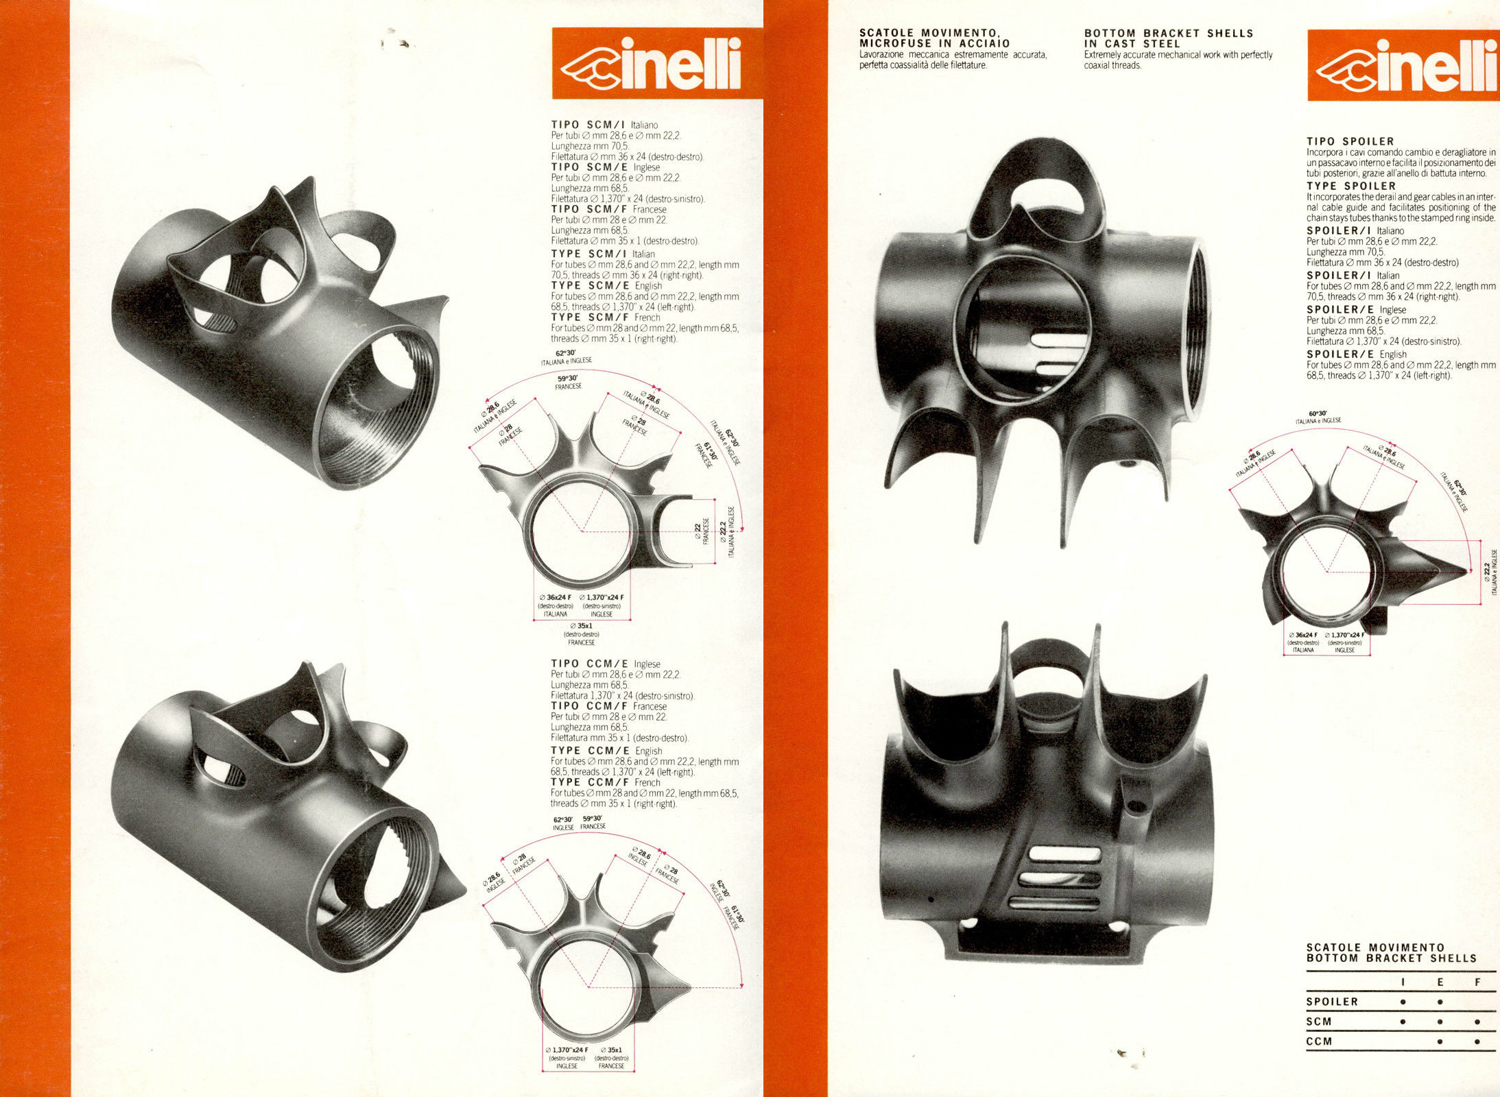 catalogo-cinelli-80s-lugs-2-copy.jpg